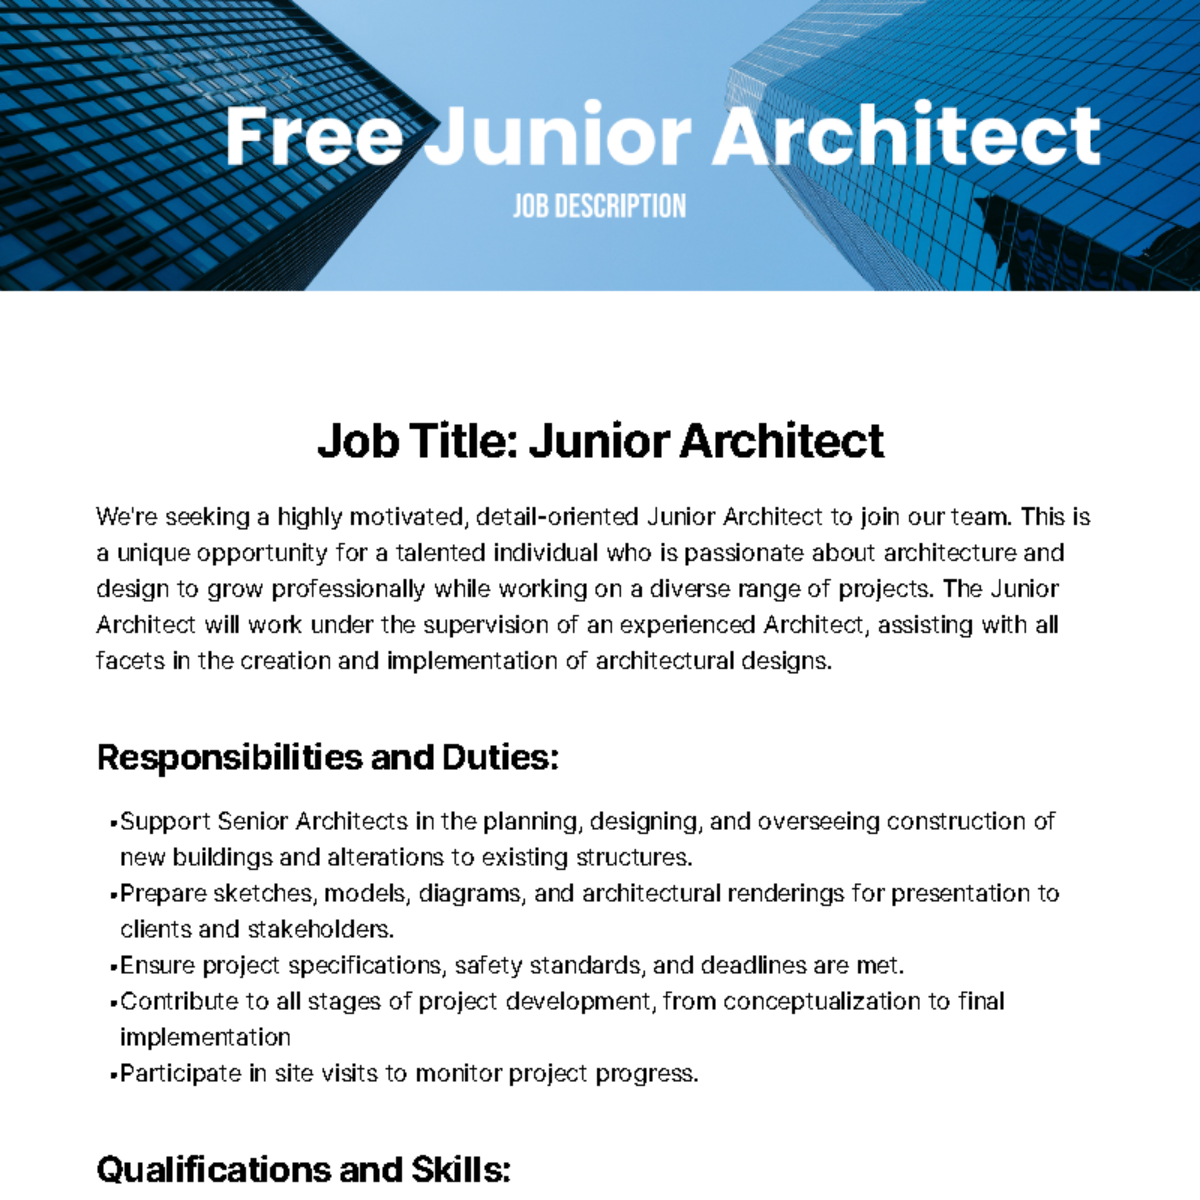 Free Junior Architect Job Description Template